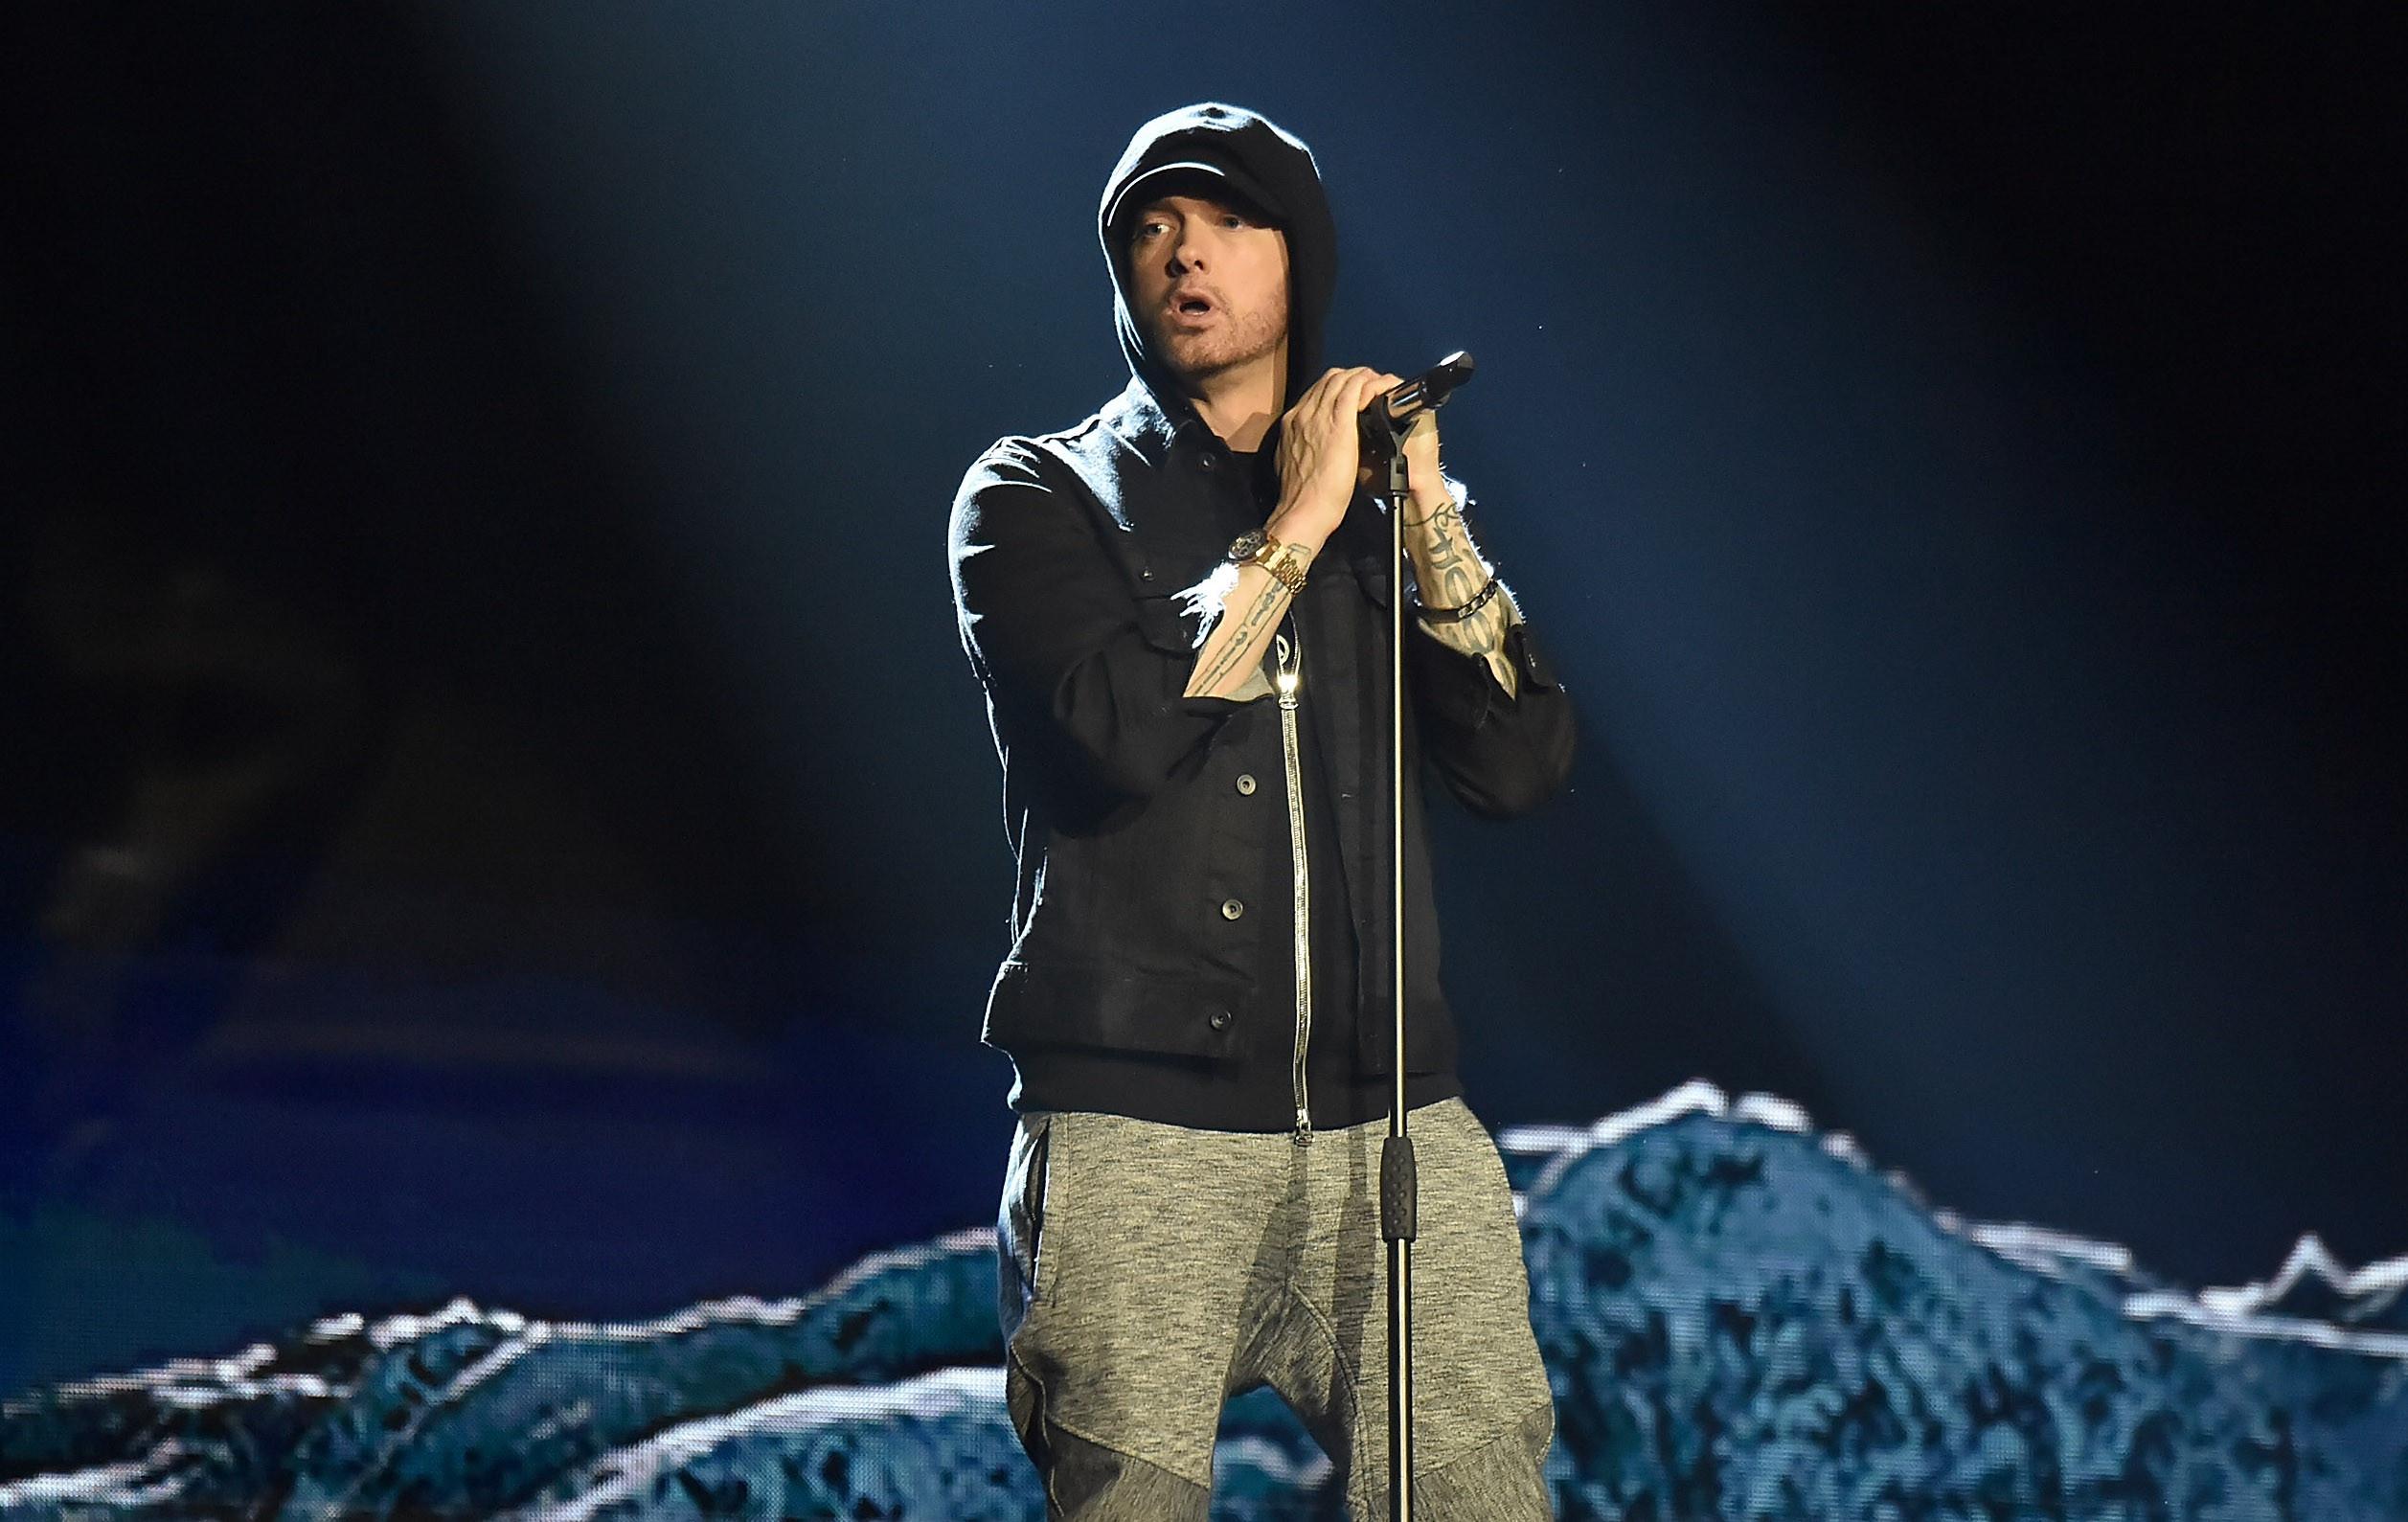 Eminem World Tour 2018: Everything We Know So Far